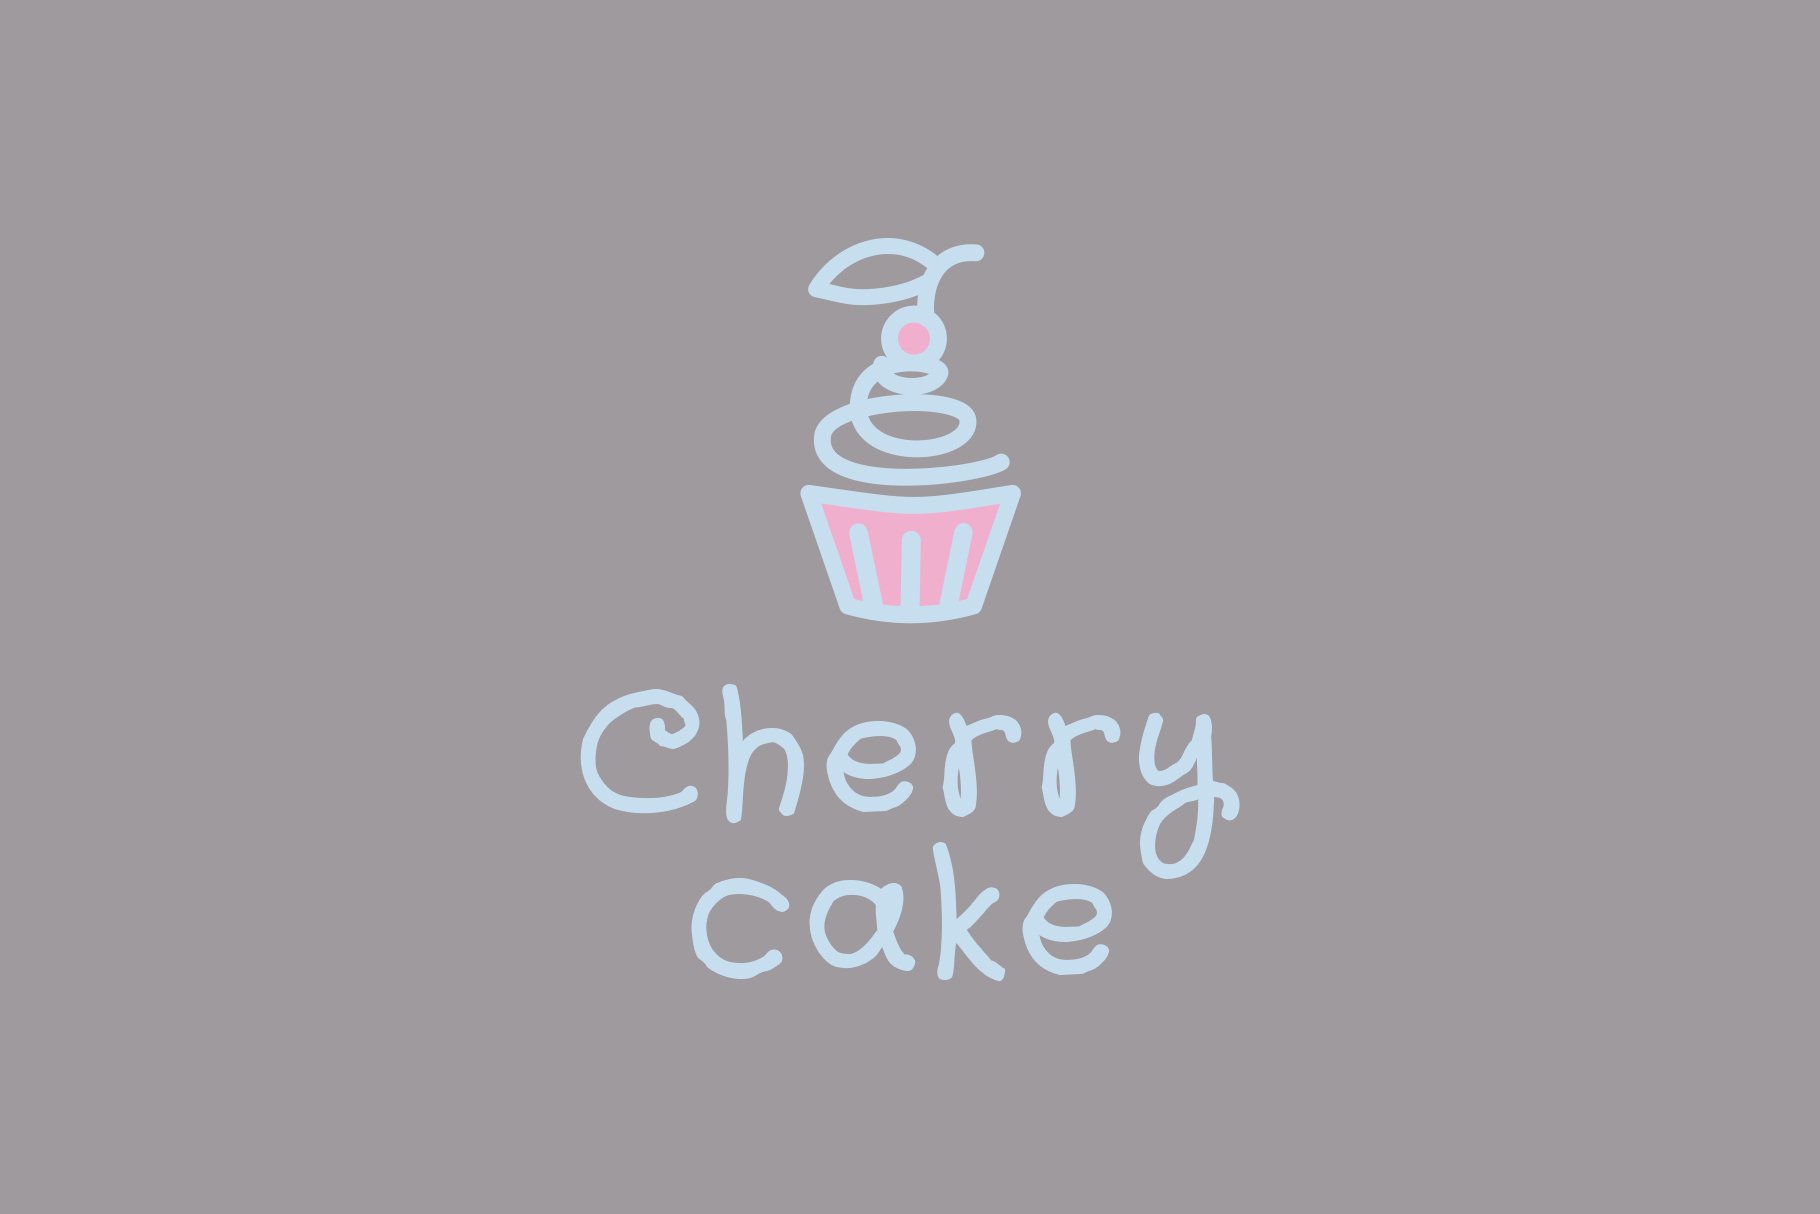 Cherry cake cover image.